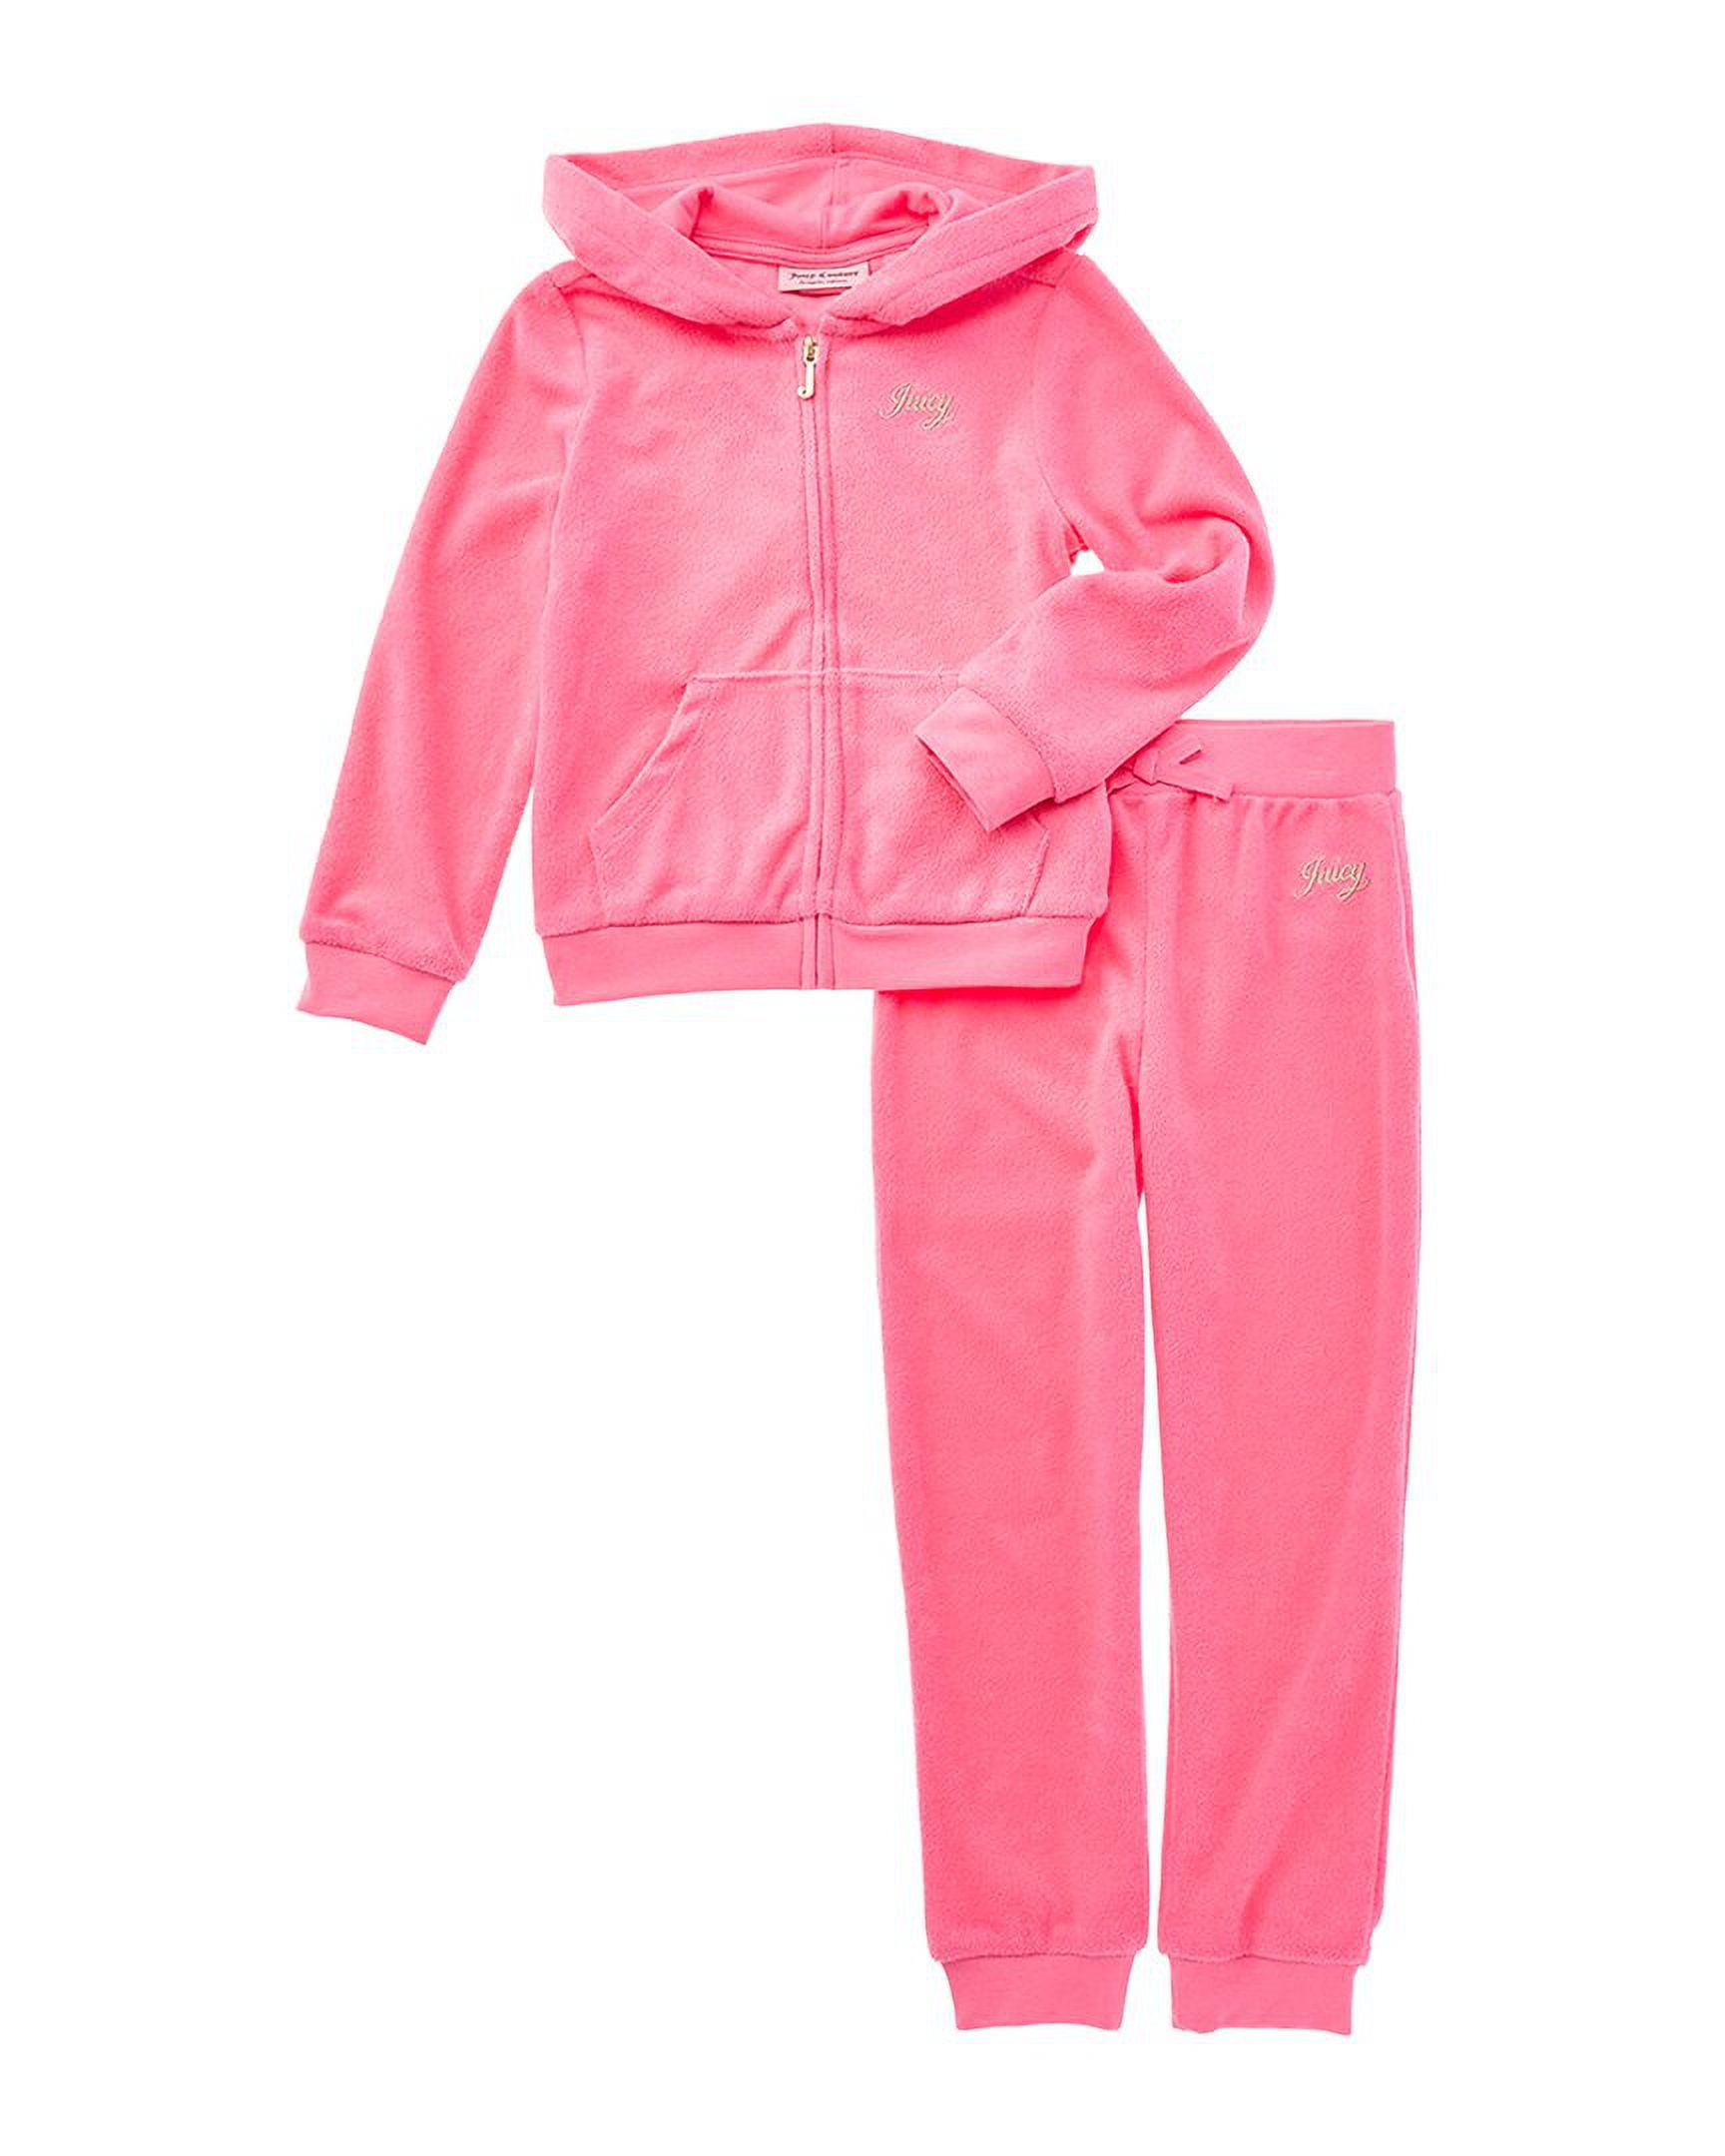 Juicy Couture girls 2pc Velour Jacket & Pant Set, 3T, Pink - Walmart.com